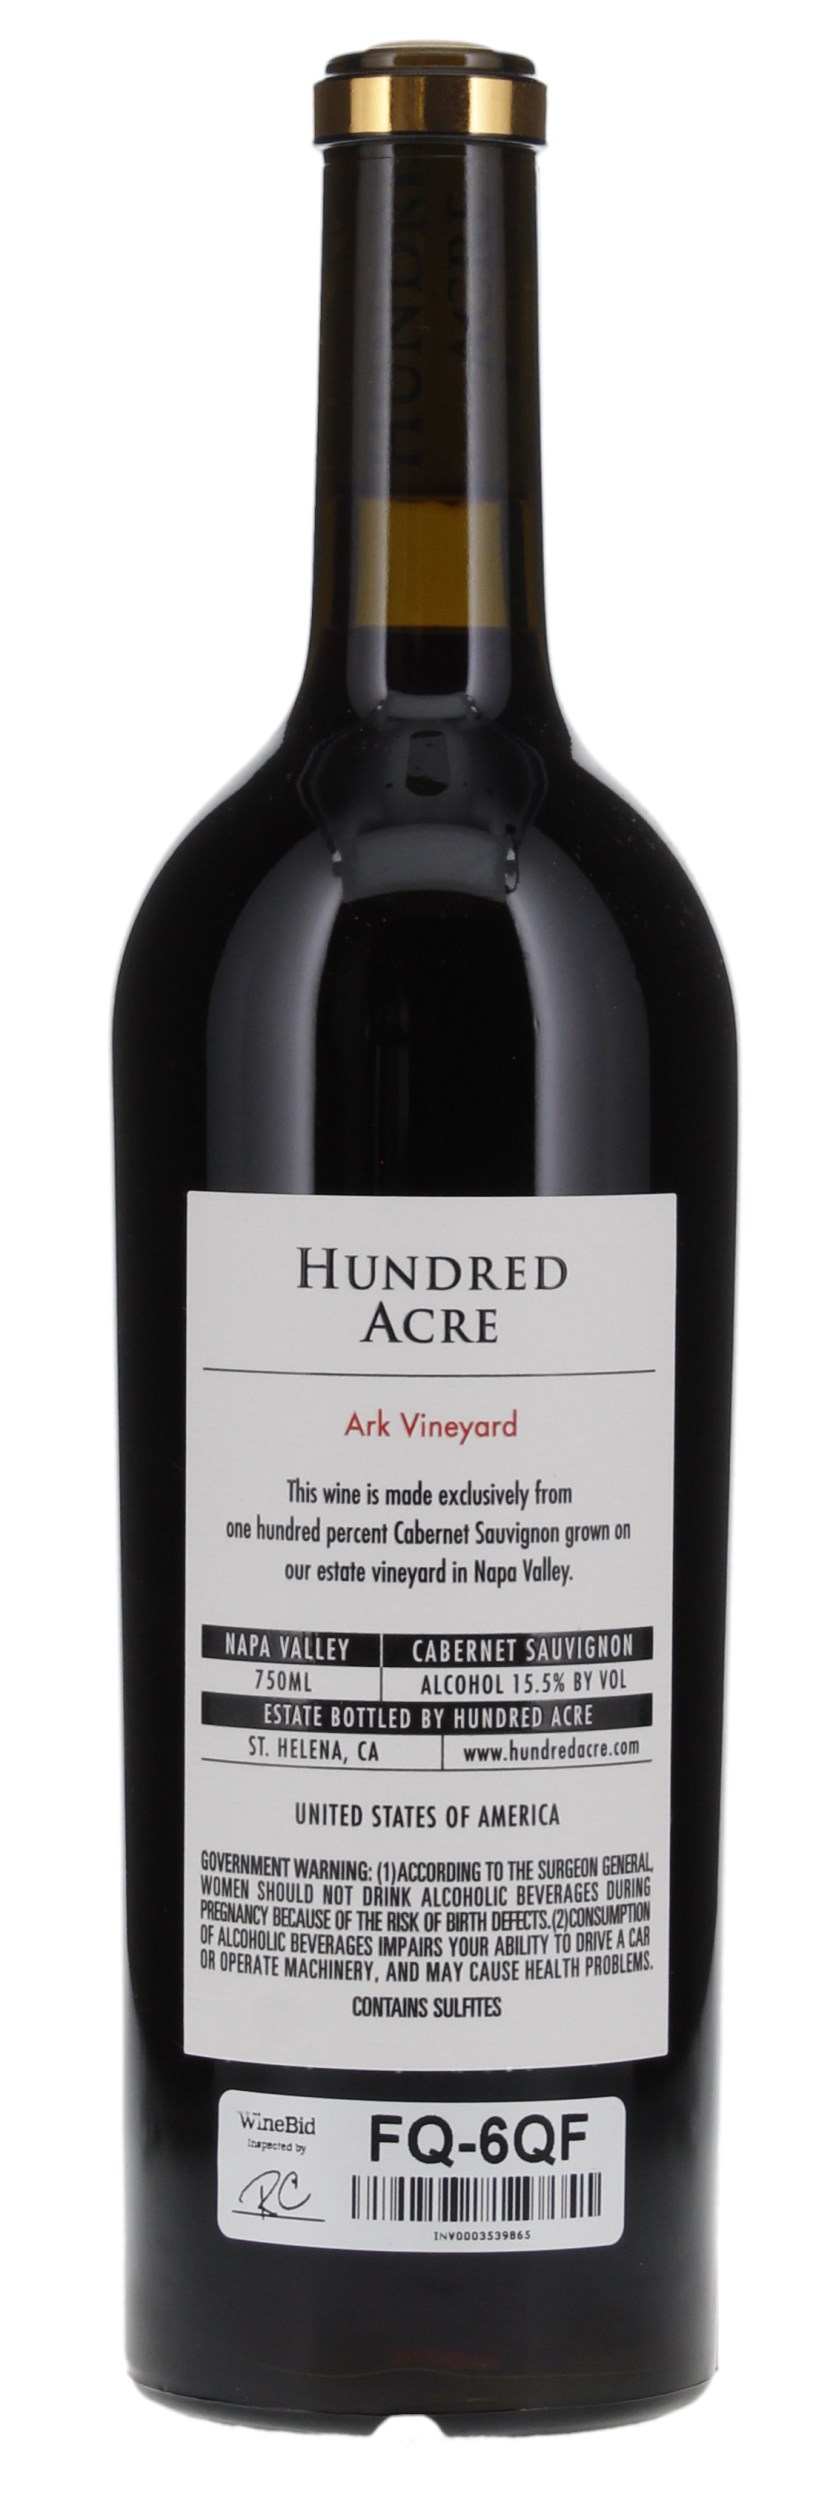 2017 Hundred Acre The Ark Vineyard Cabernet Sauvignon, 750ml